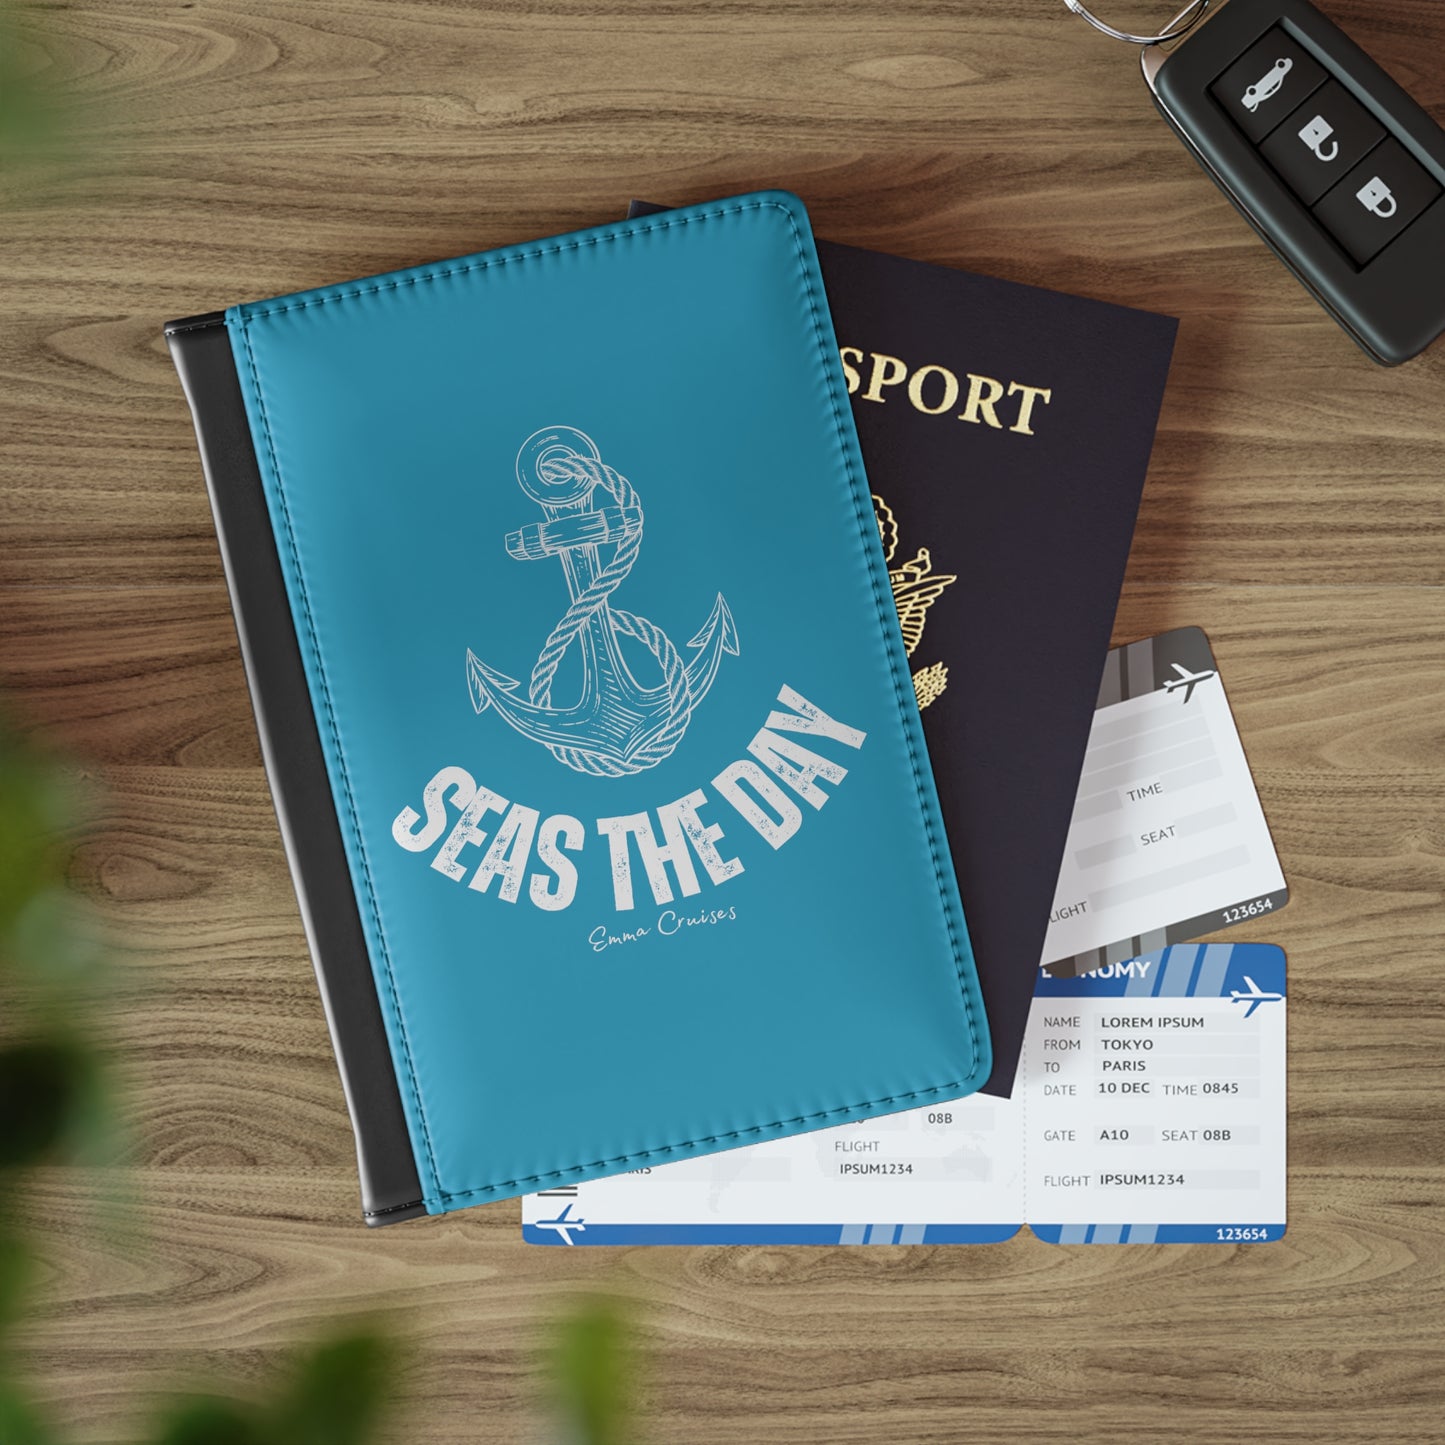 Seas the Day - Passport Cover